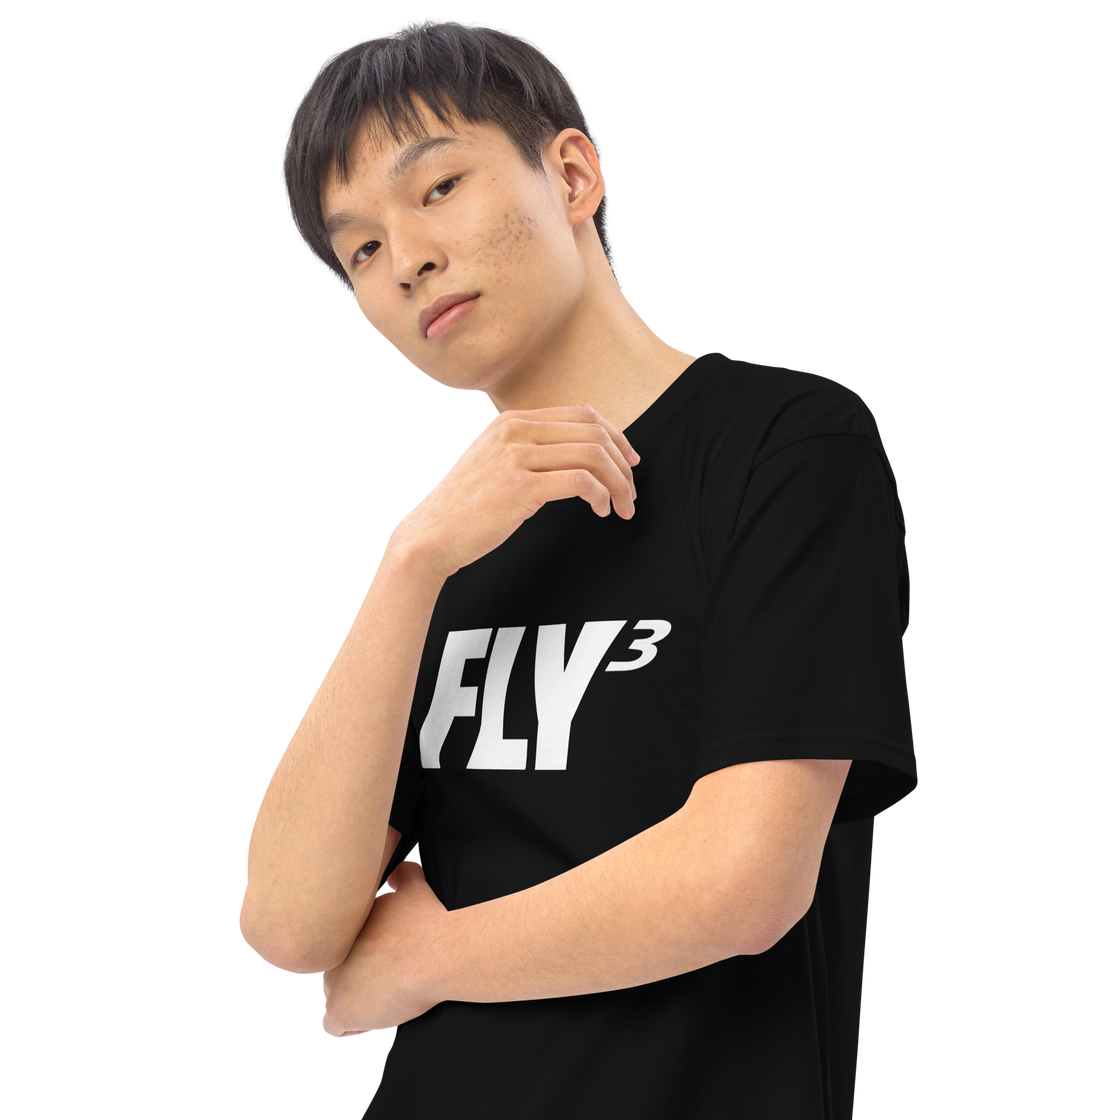 FLY³ Original | Flycube